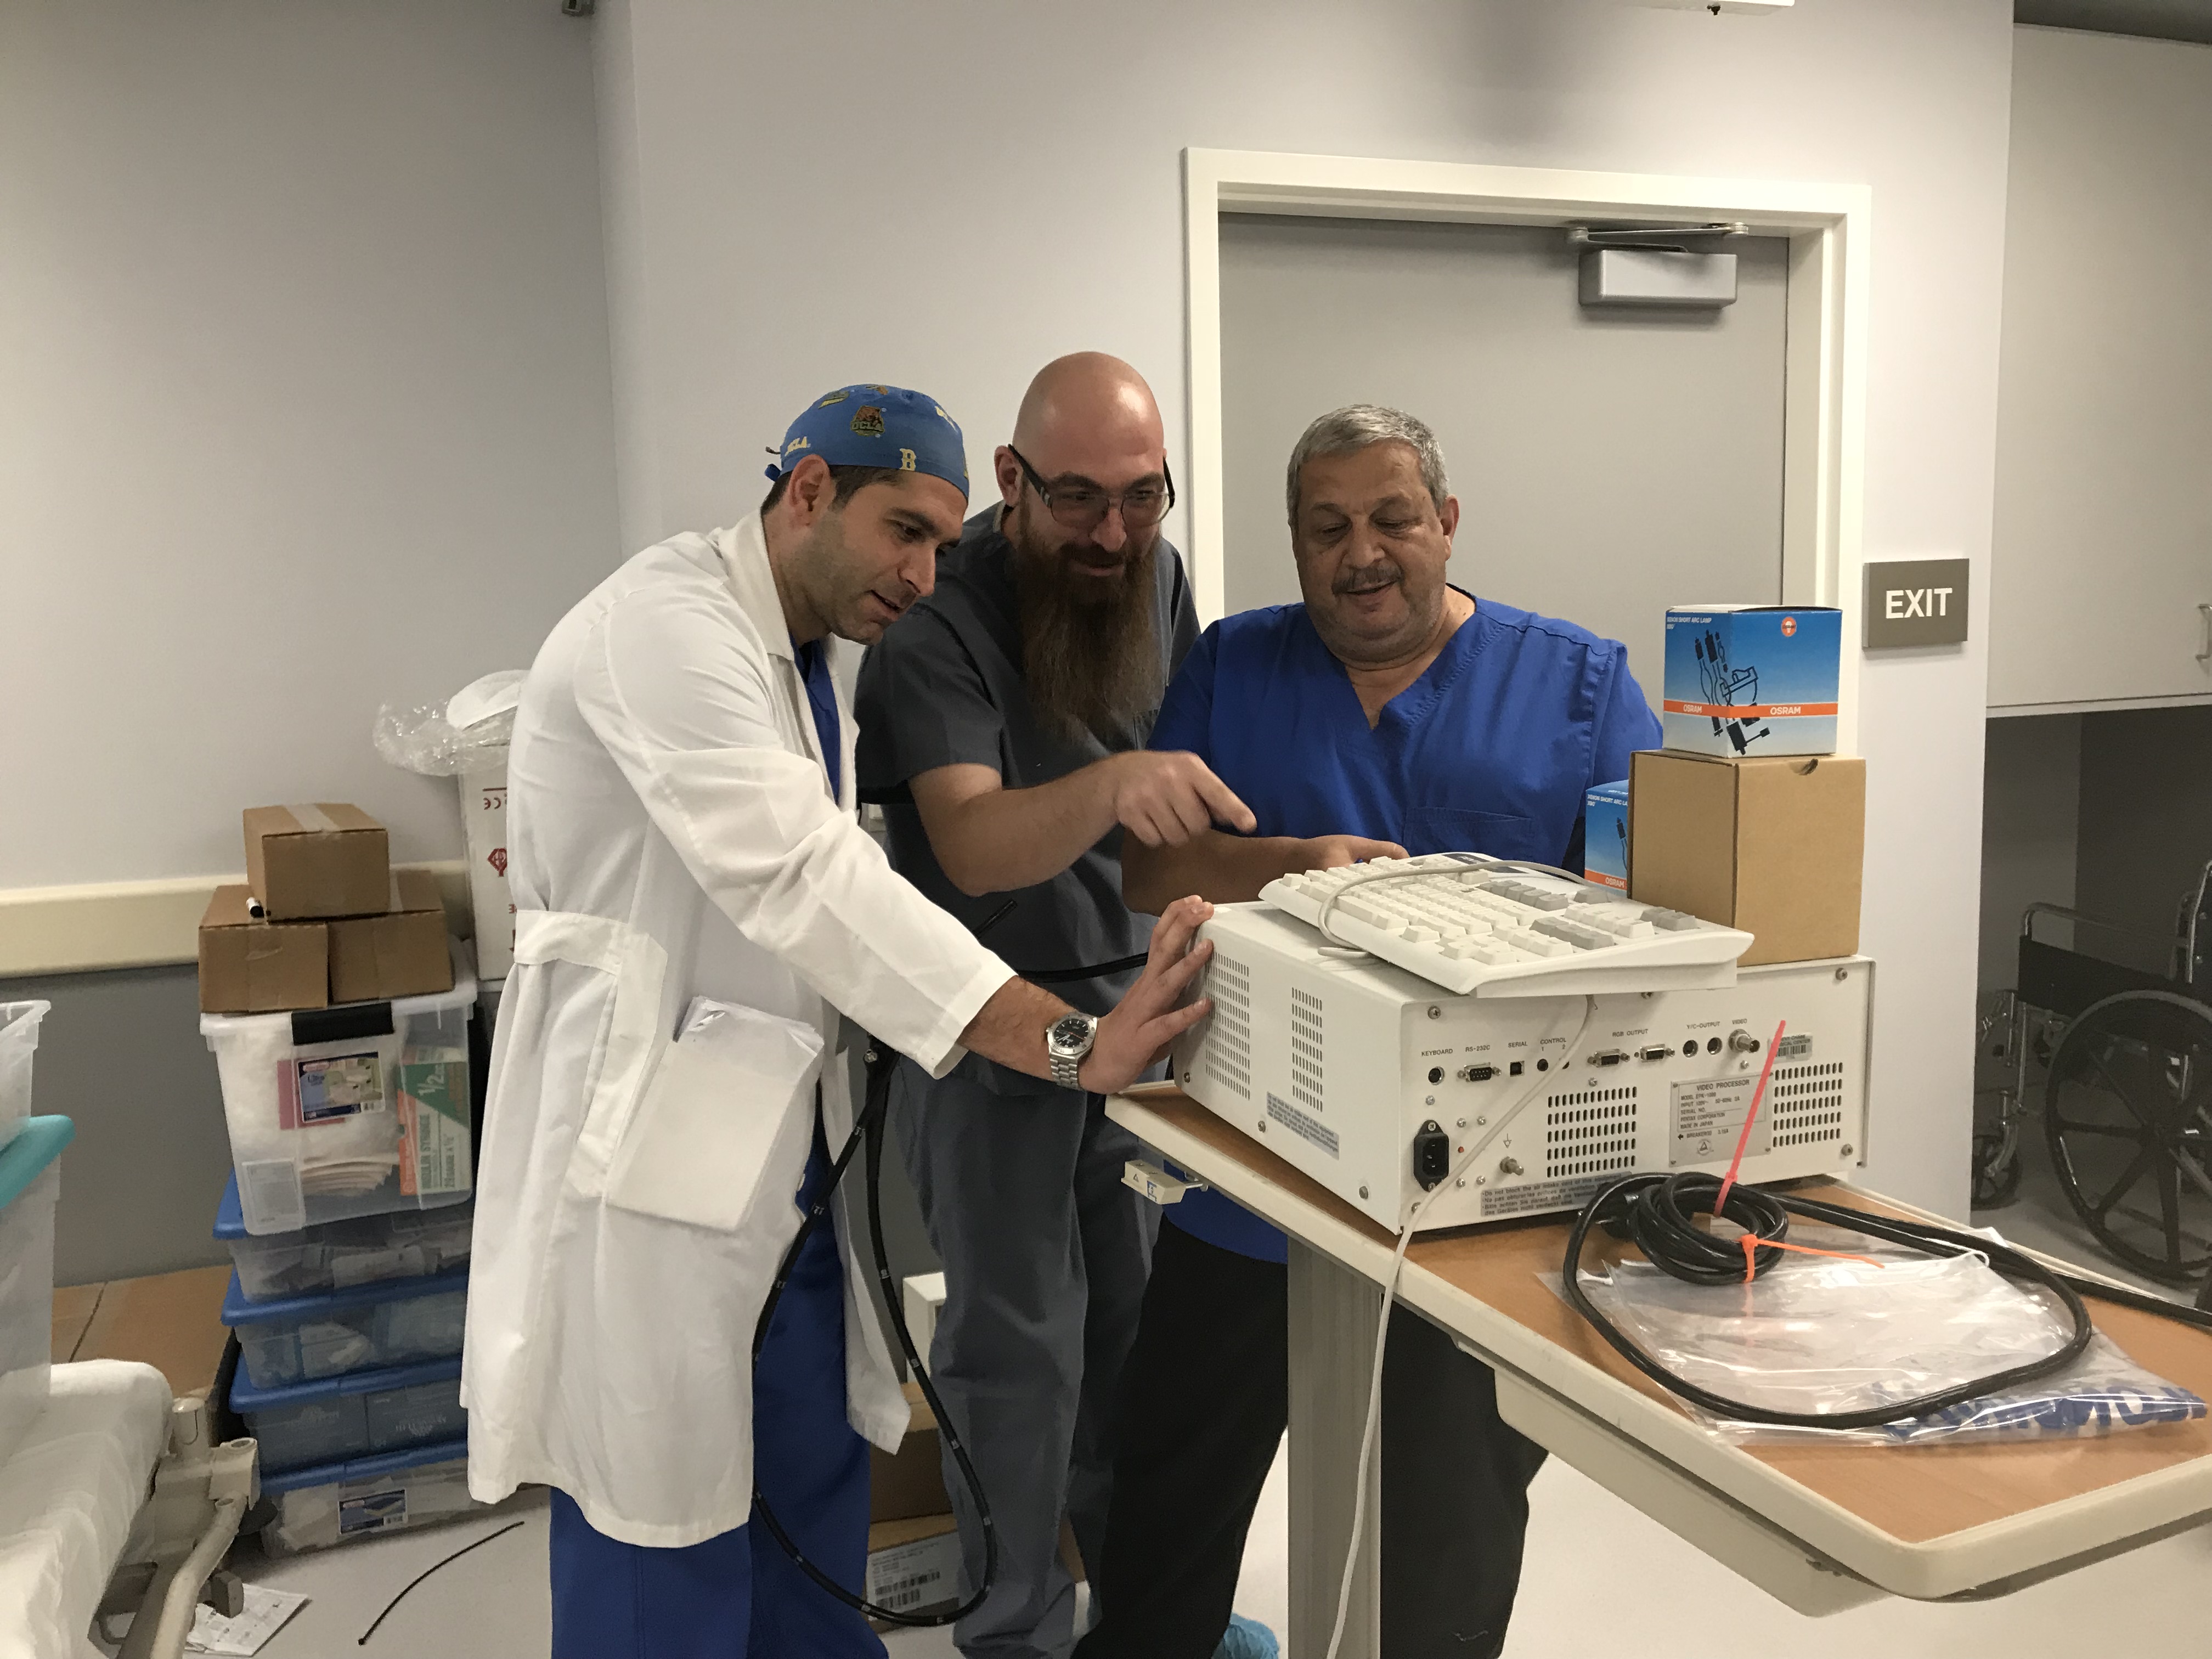 L to R: Gastroenterologist Dr. Edgar Mehdikhani, GI Tech Vartan Lalayan, and Surgery Center Administrator Raffi Sarkissian make final reviews of the GI scopes and processors.